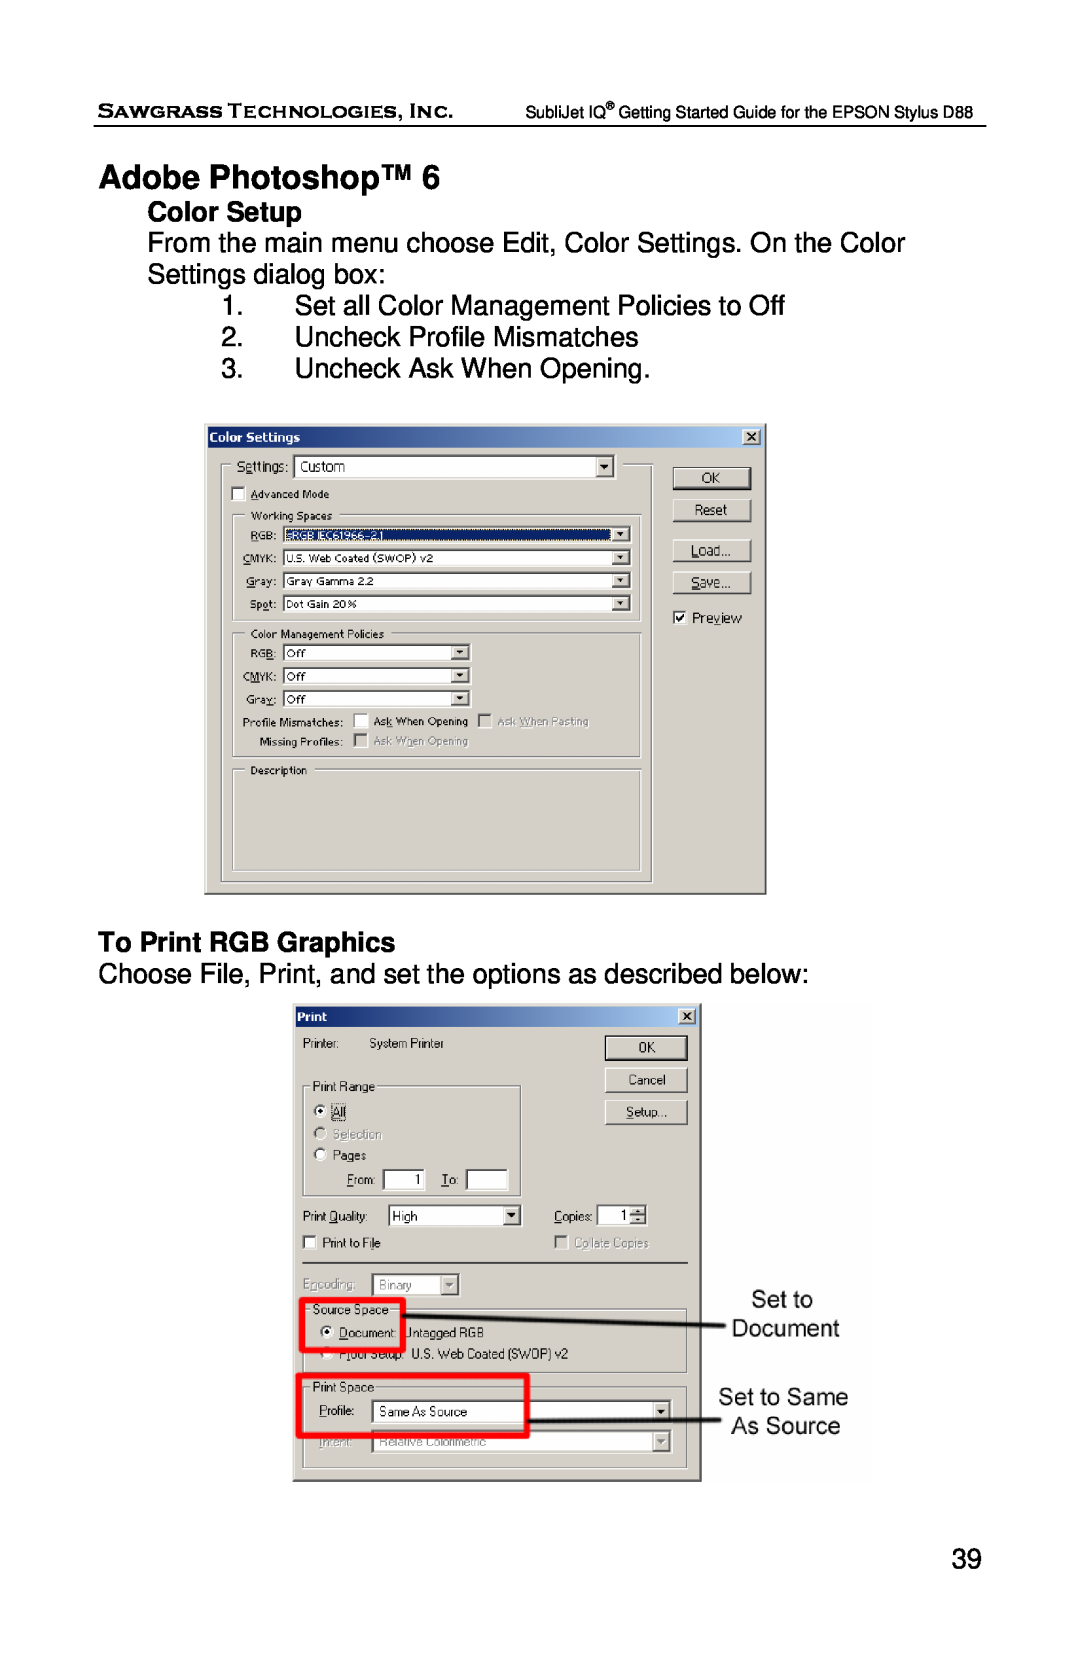 Epson D88 manual Adobe Photoshop, Color Setup, To Print RGB Graphics 